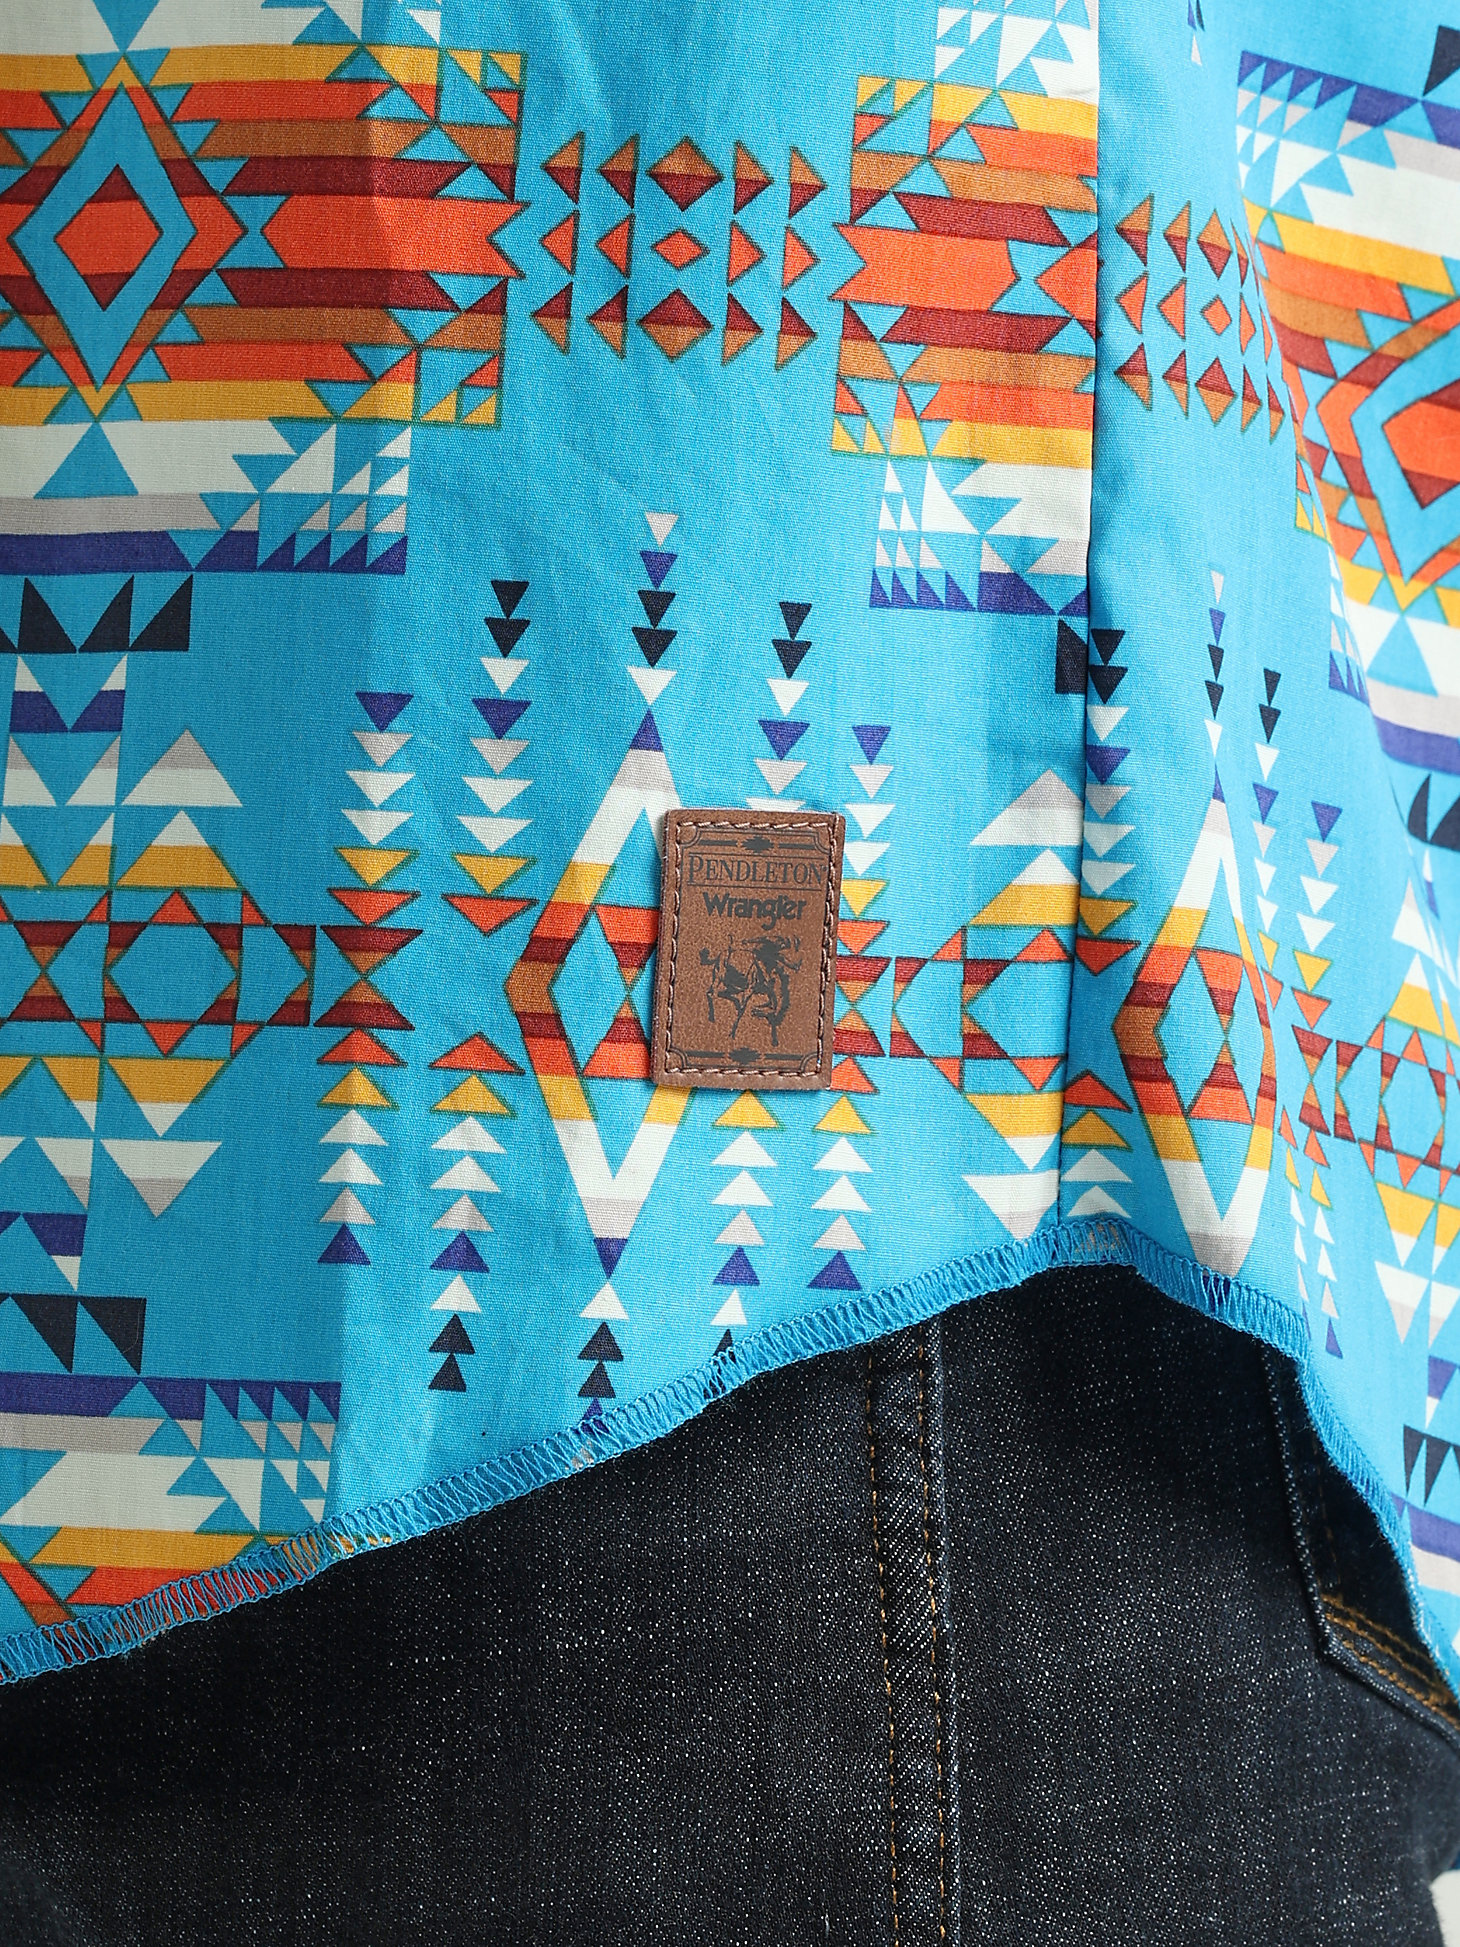 Wrangler x Pendleton Men's Plaid Inlay Work Shirt in Turquoise Print alternative view 4